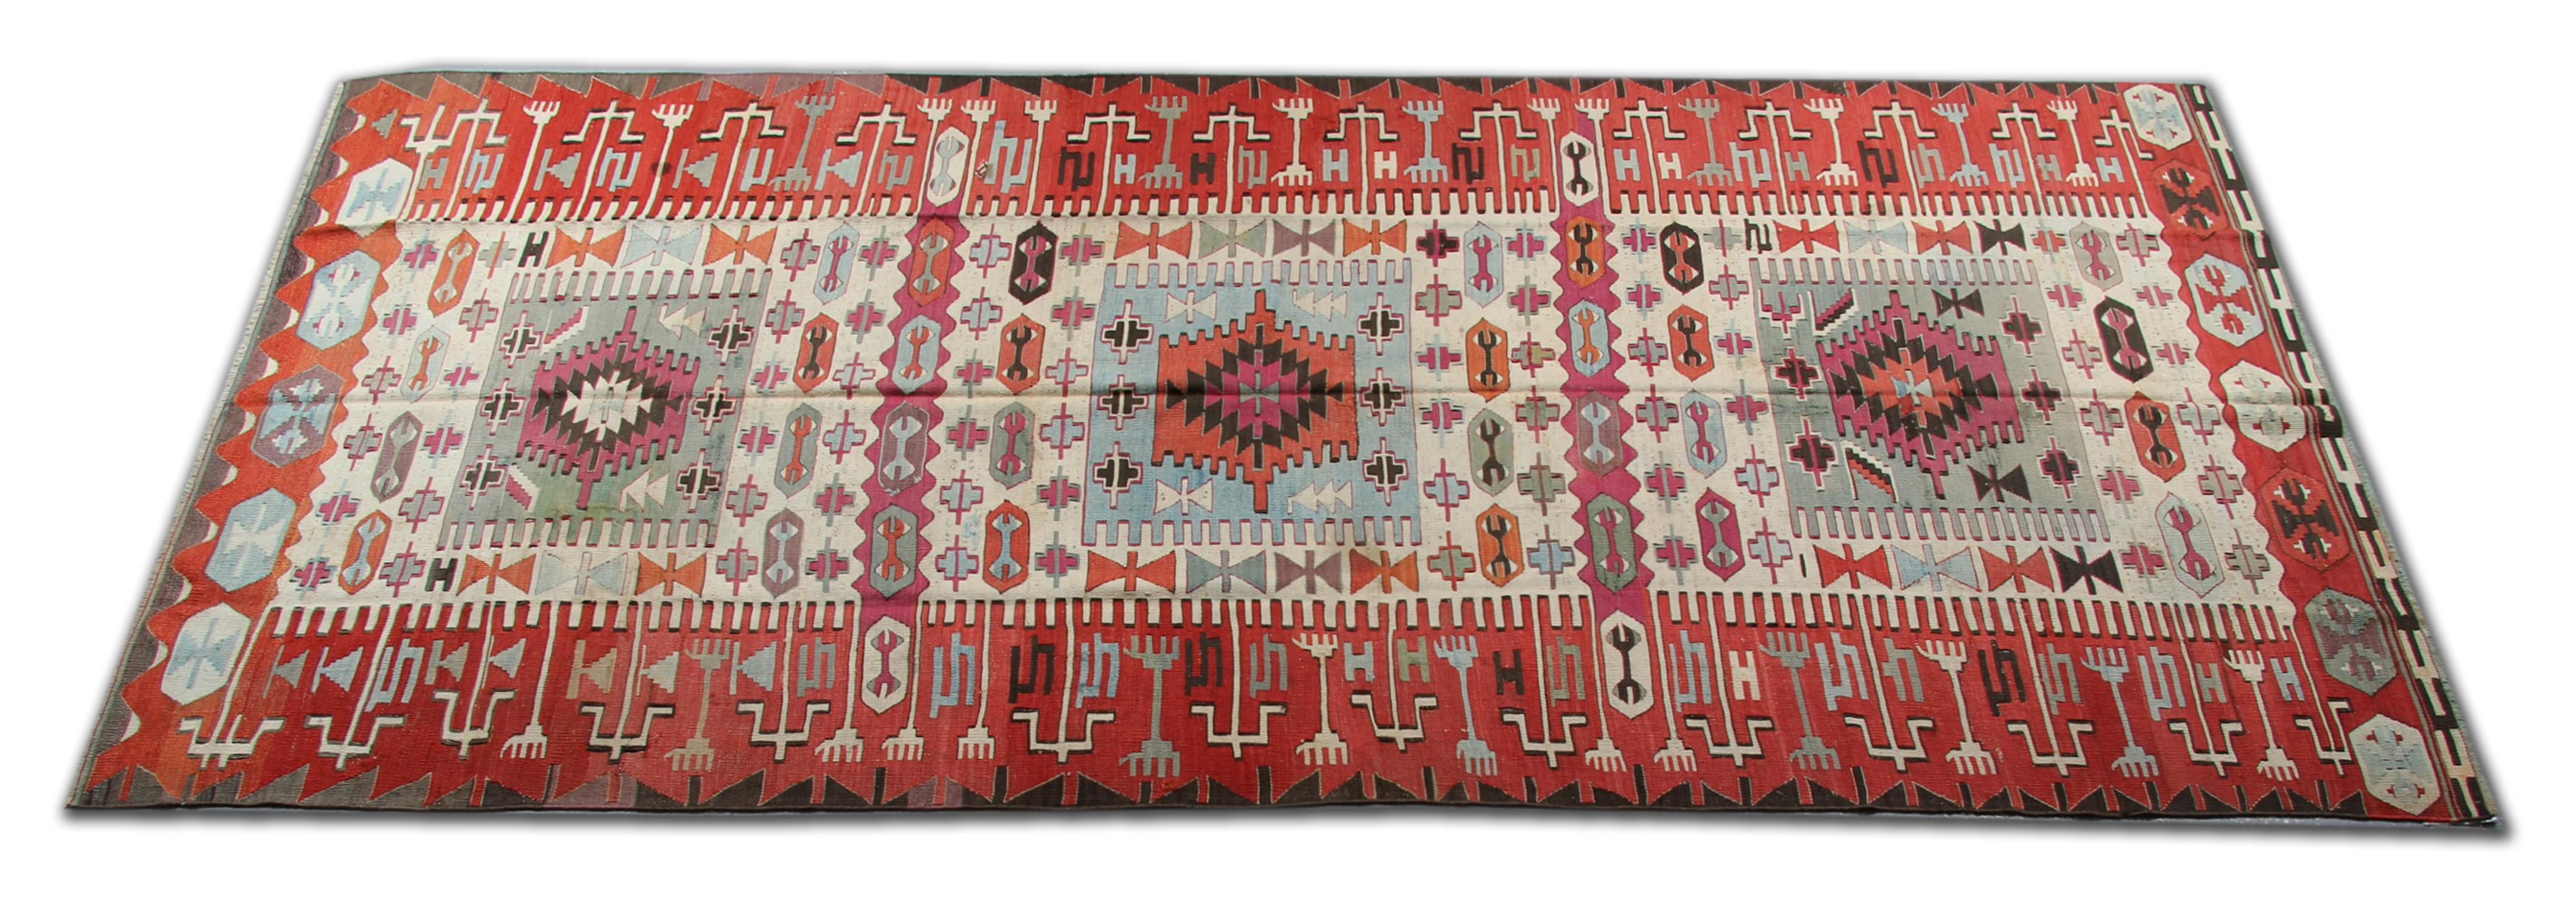 Late 19th Century Antique Rugs Traditional Turkish Kilim Rug Oriental Wool Area Rug